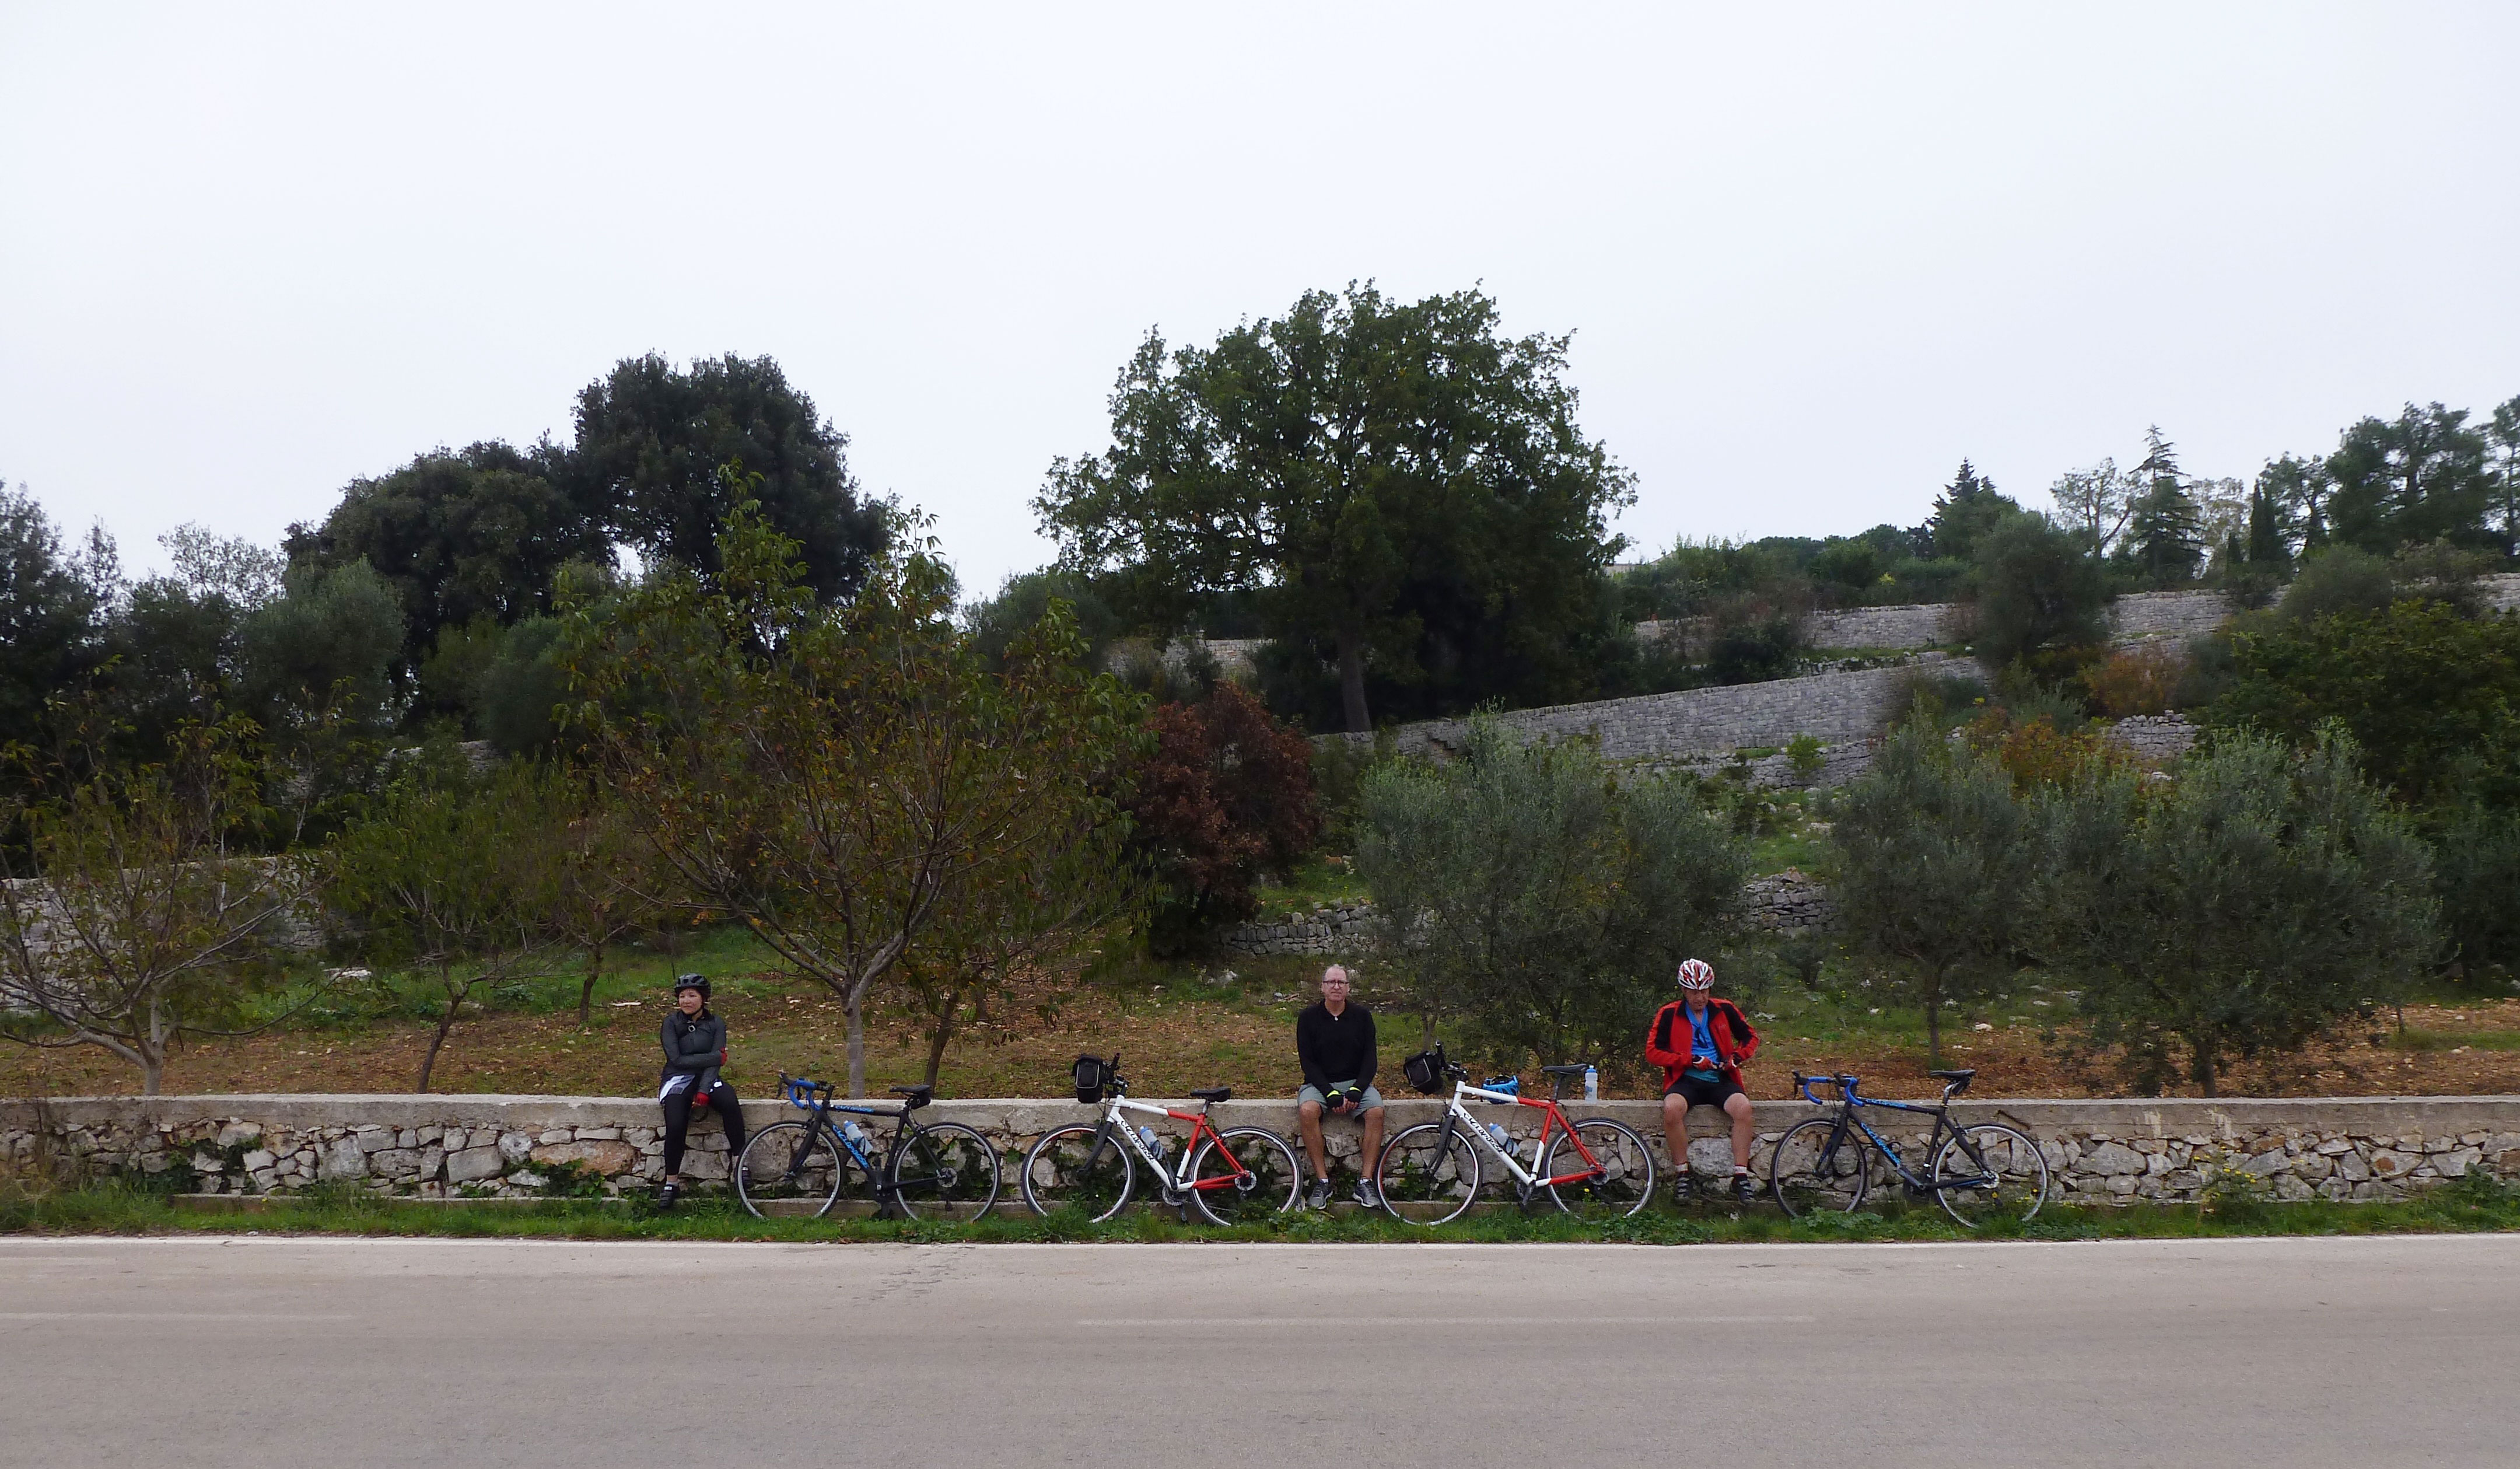 Puglia Bike Tour